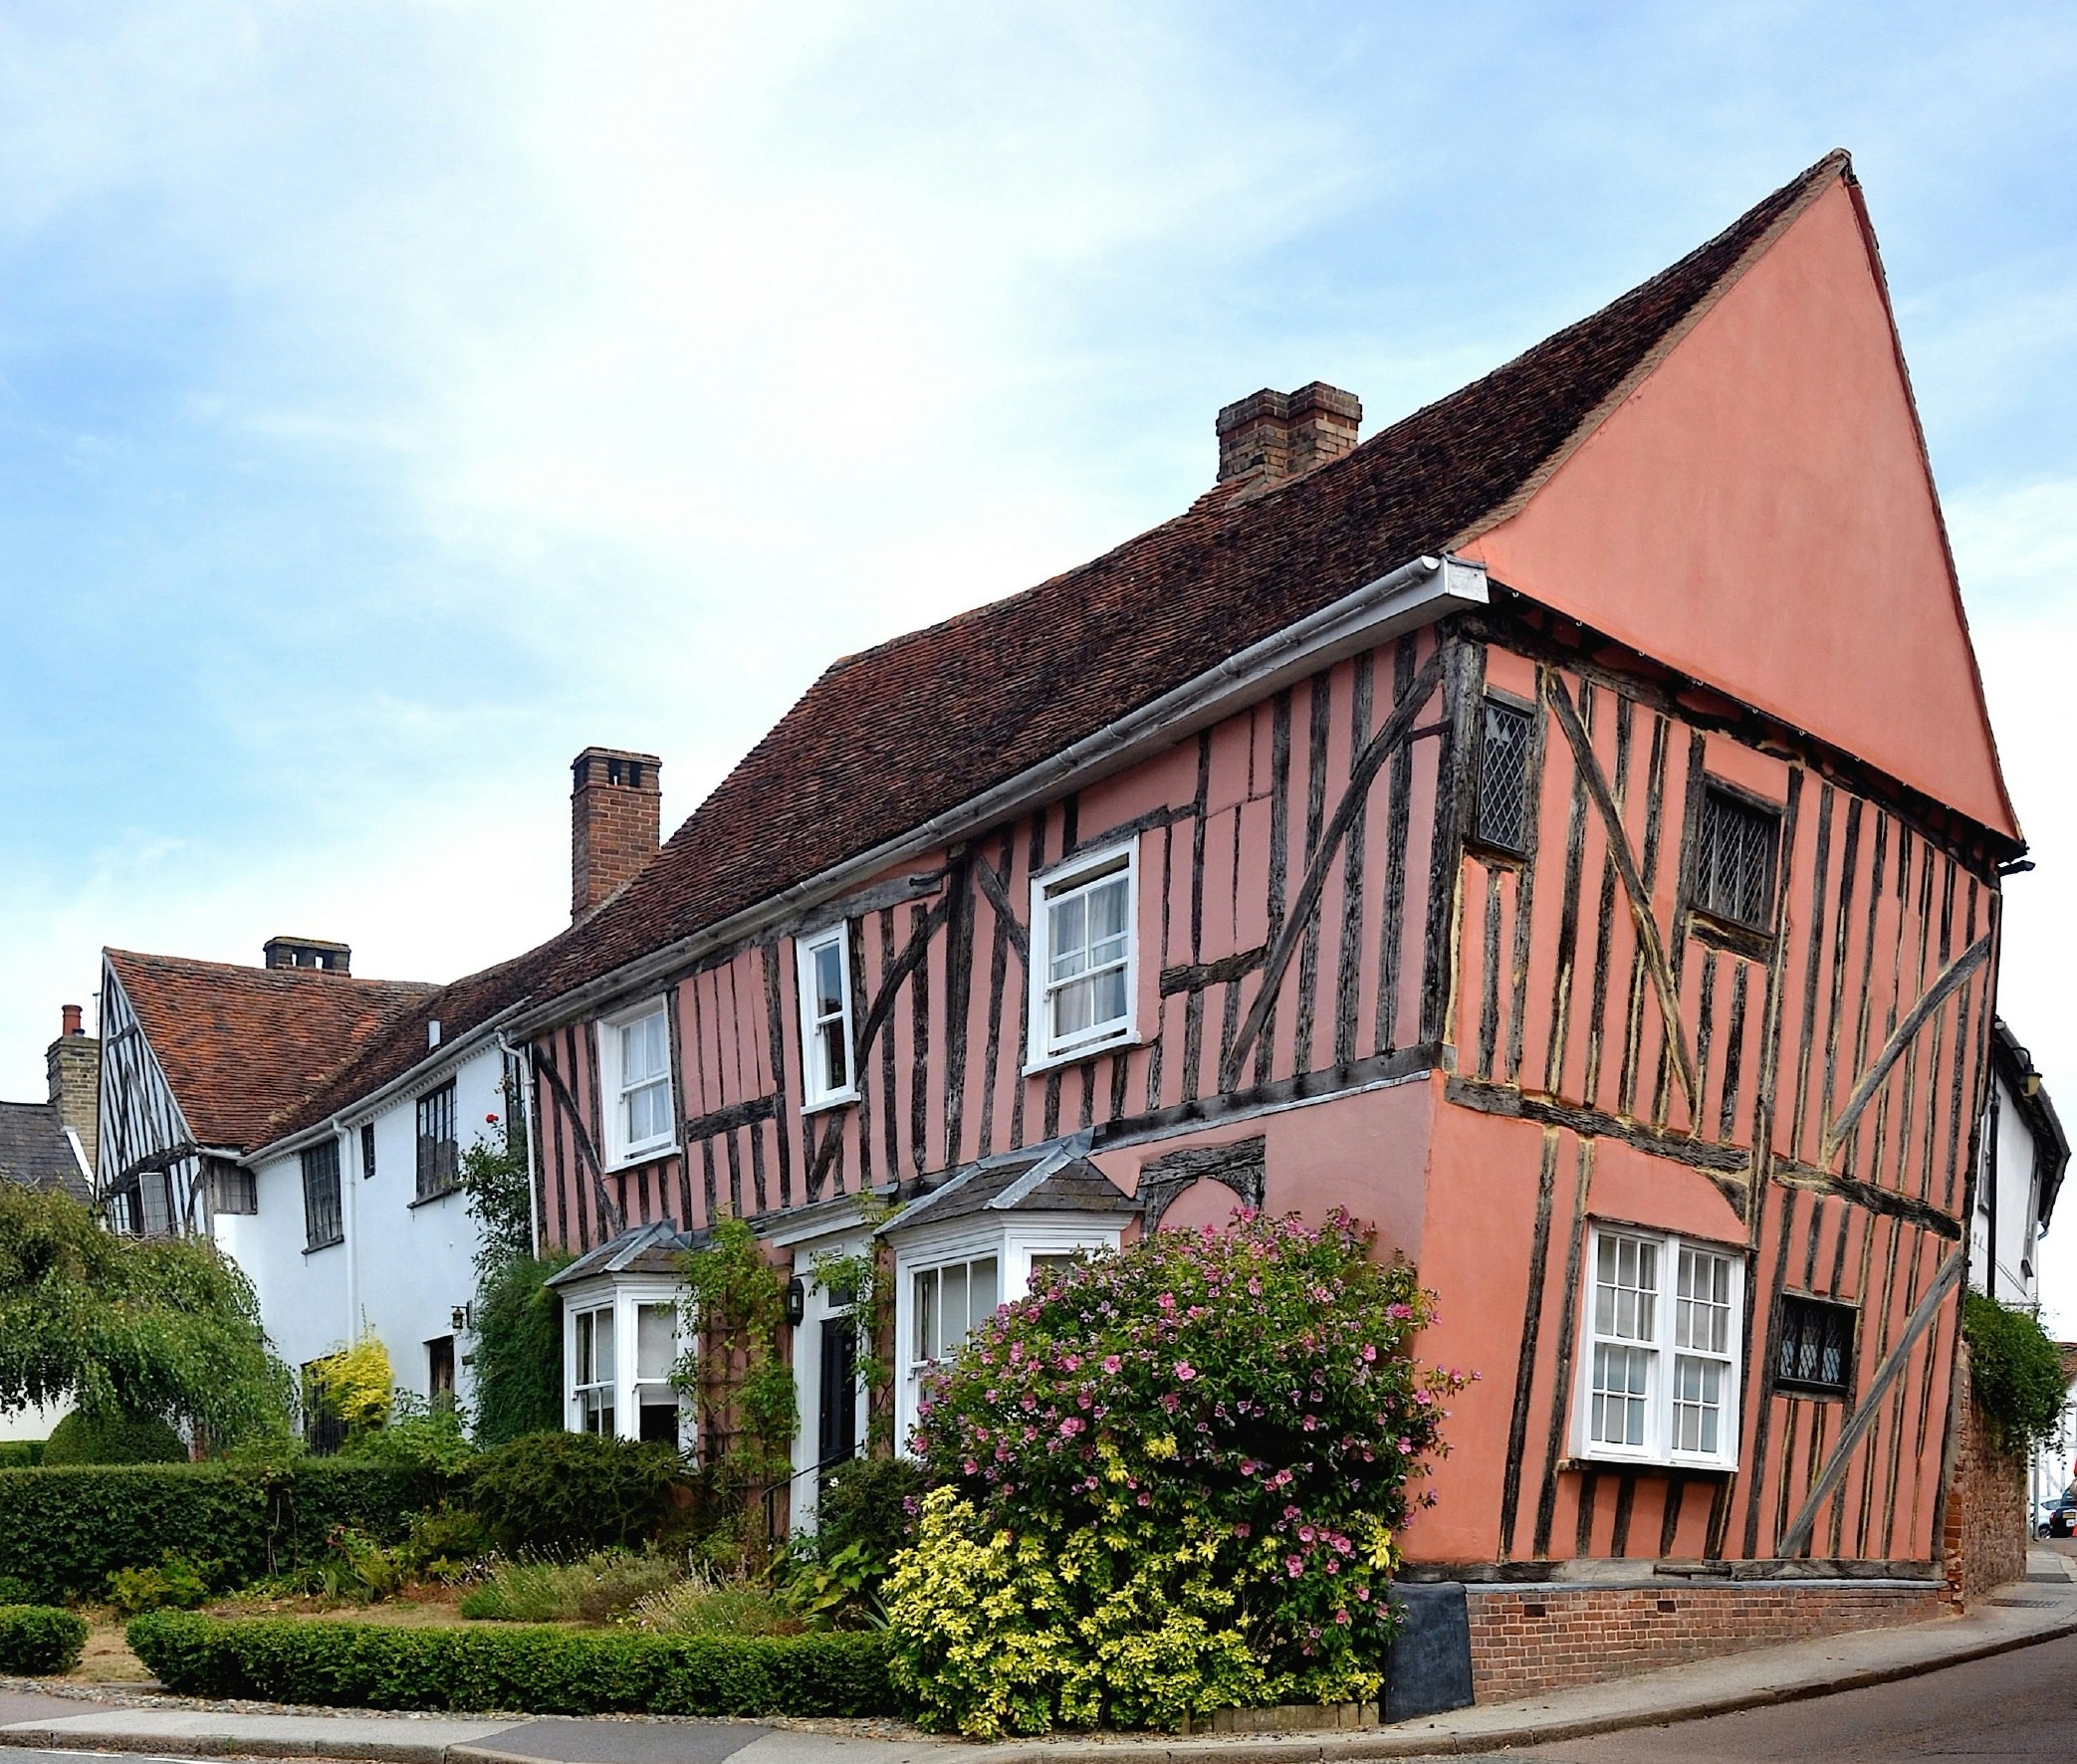 A beautiful old tudor house in Lavenham, Suffolk